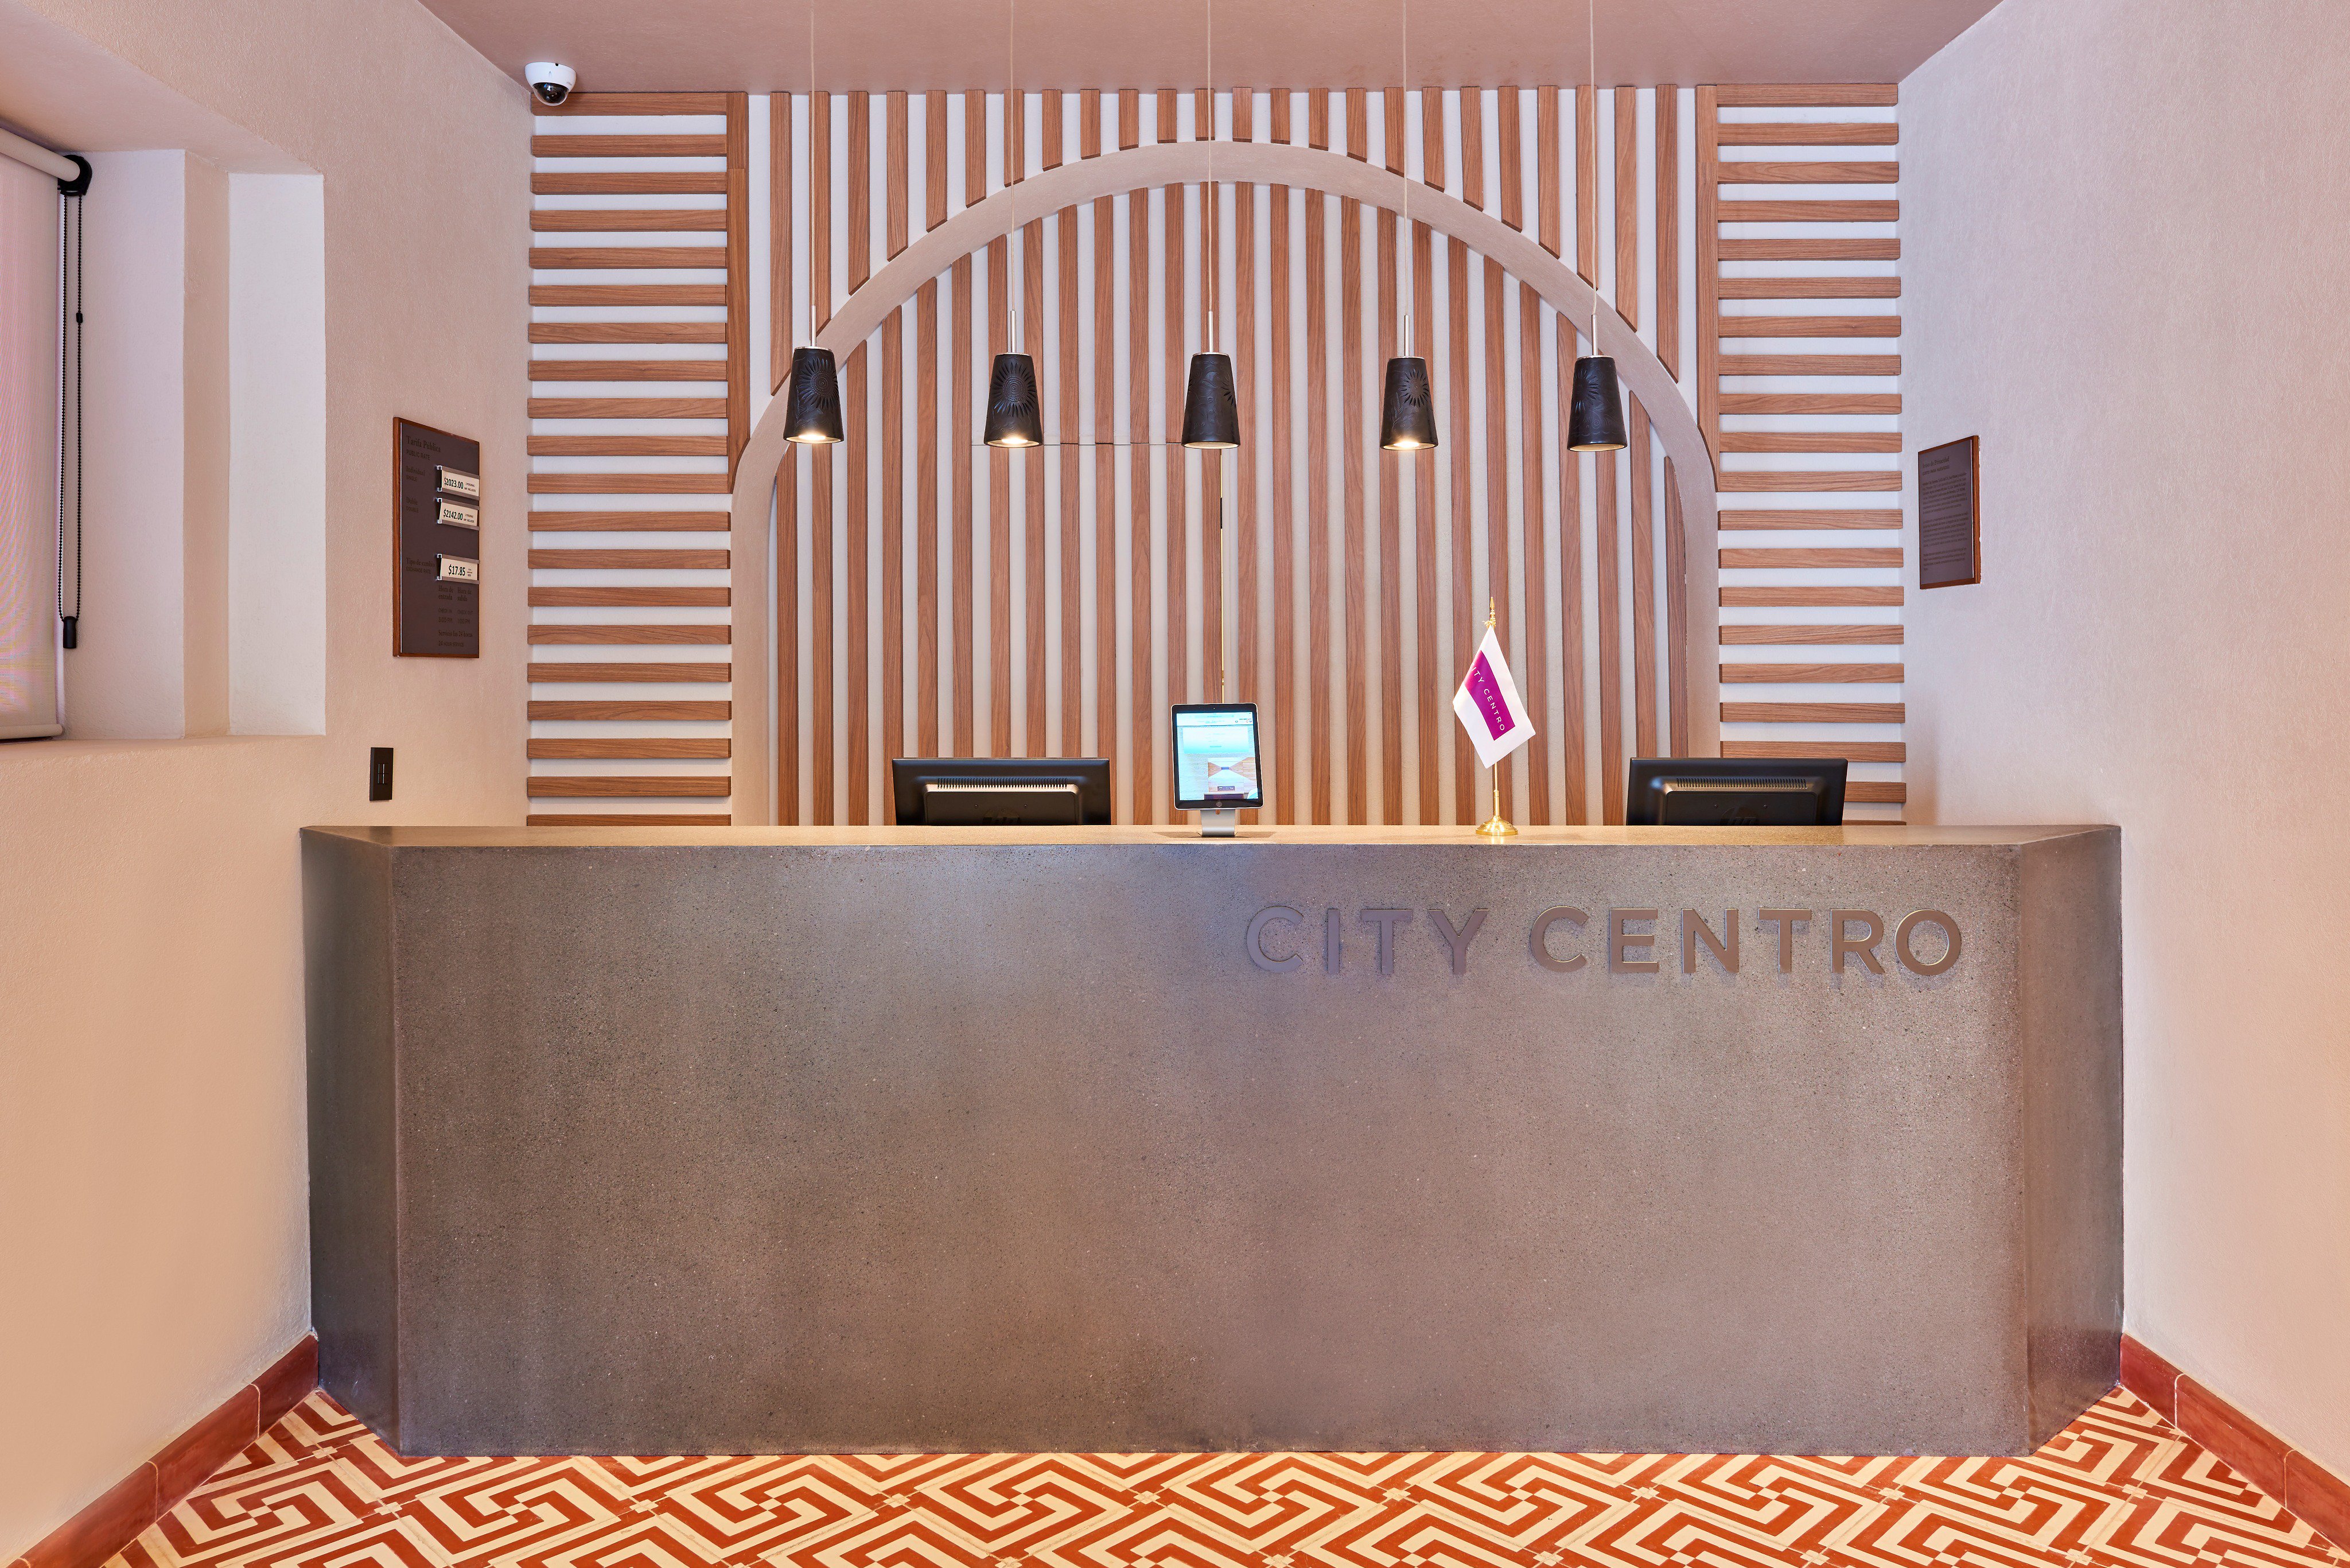 servicios del city centro oaxaca